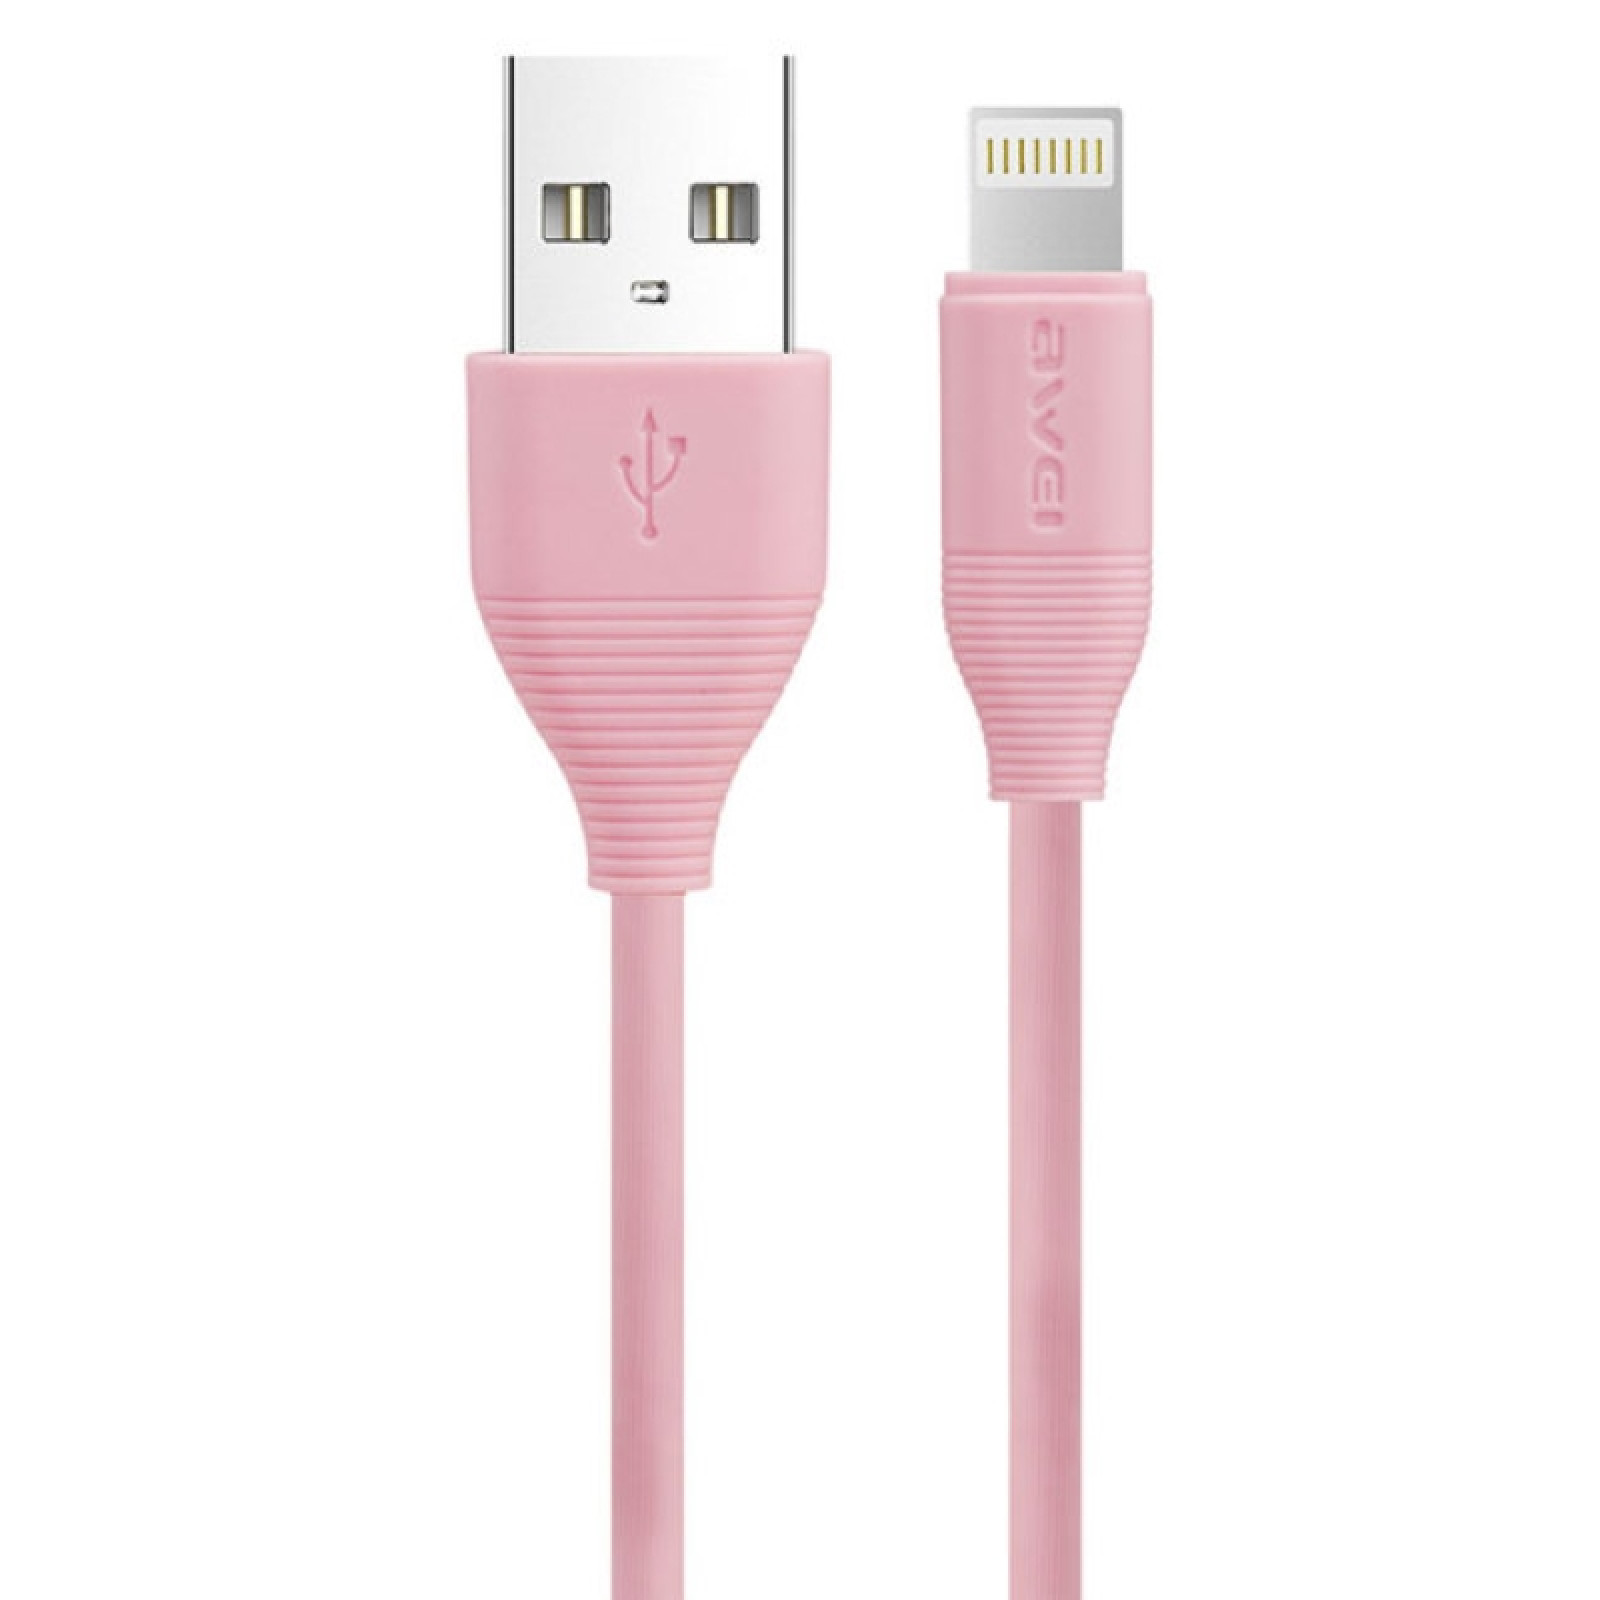 USB кабель Lightning Awei CL-93 для iPhone Pink 149587